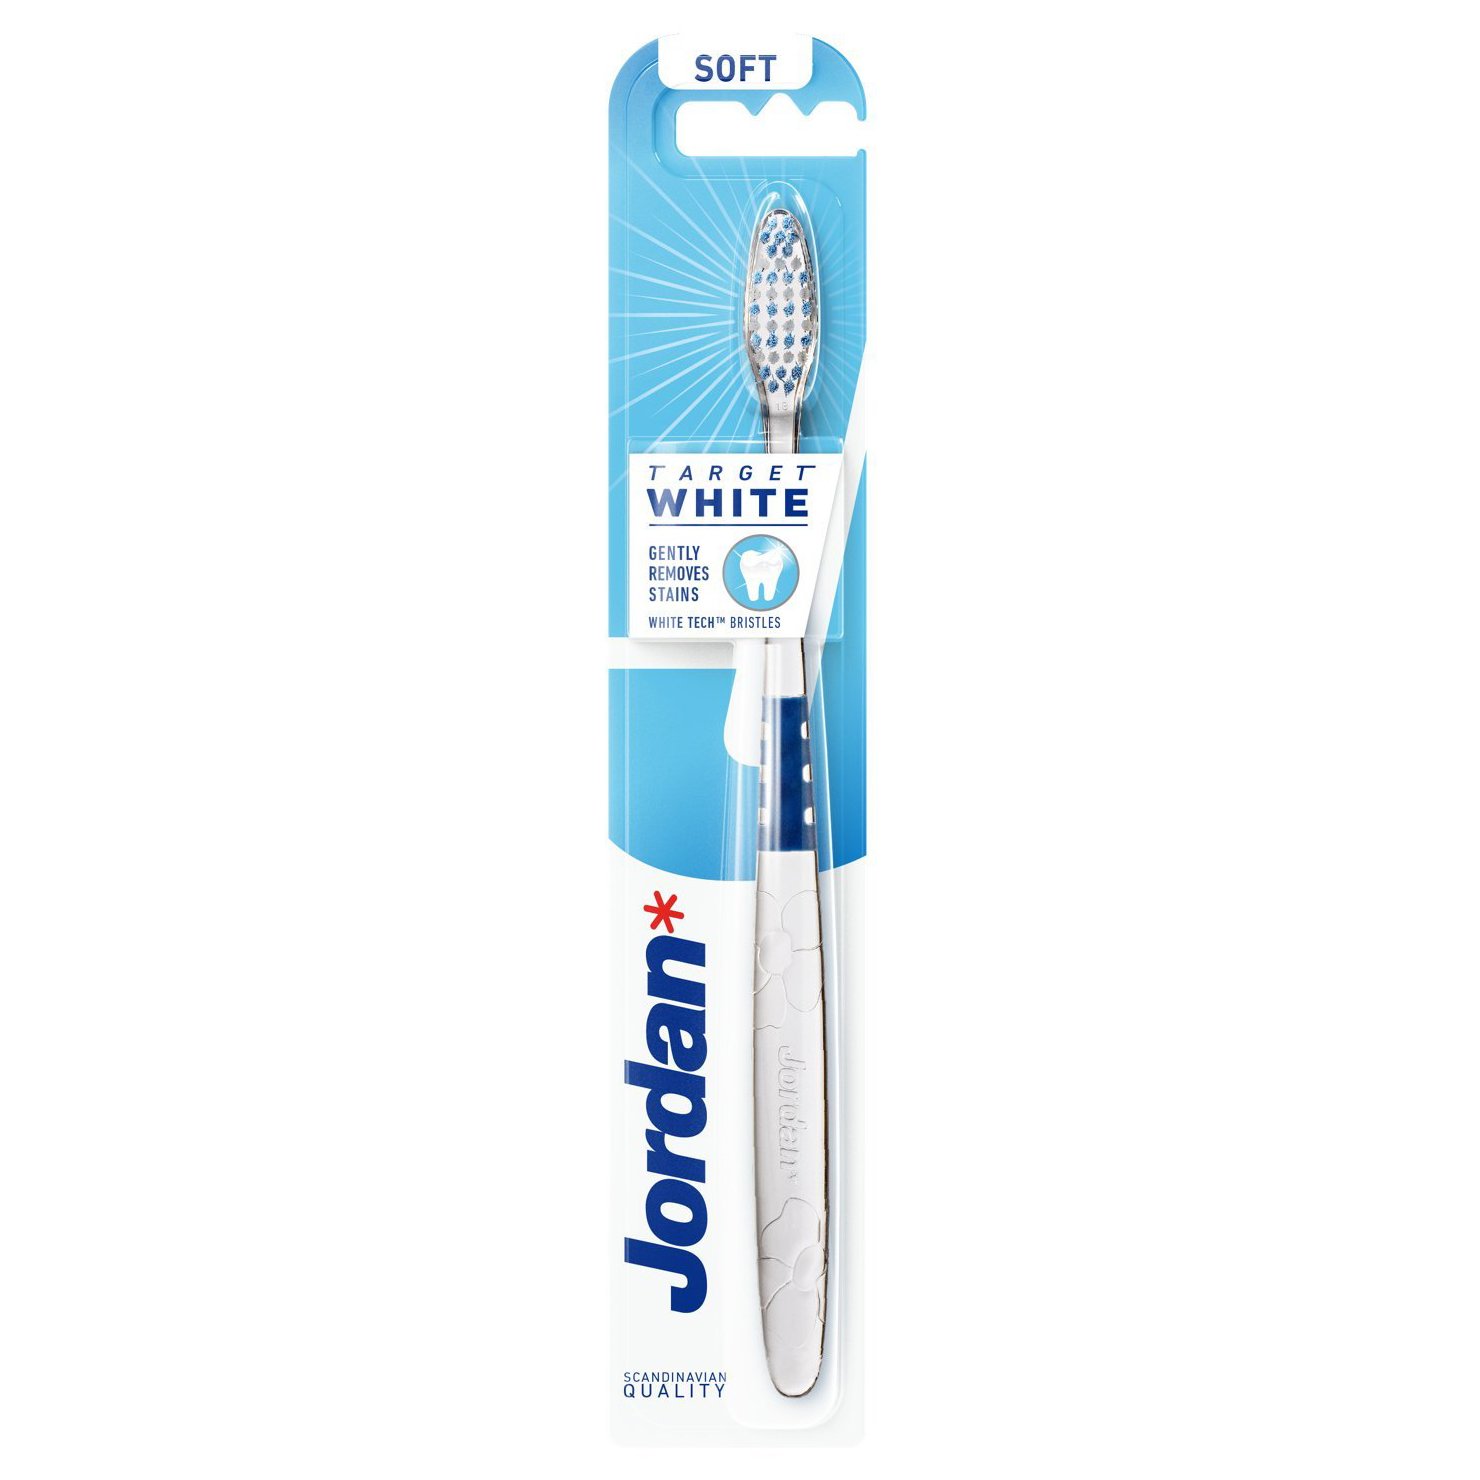 Jordan Target White Toothbrush Soft Μαλακή Οδοντόβουρτσα για Λεύκανση με Ίνες WhiteTech 1 Τεμάχιο – Μπλε